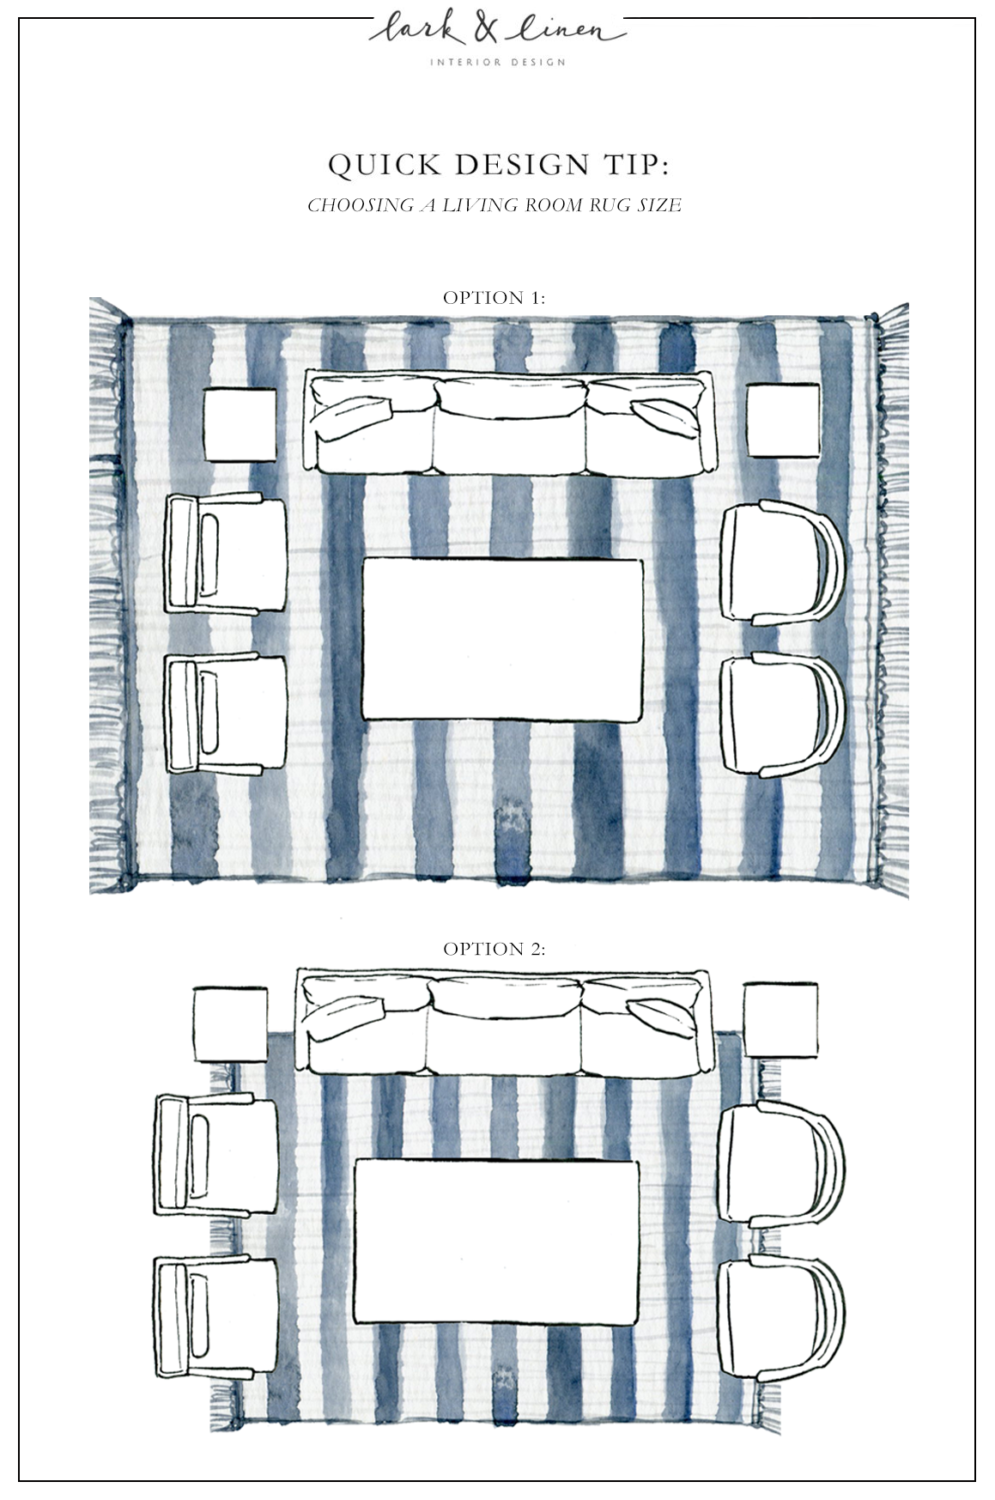 Quick Design Tip: How To Choose a Living Room Rug Size | lark & linen